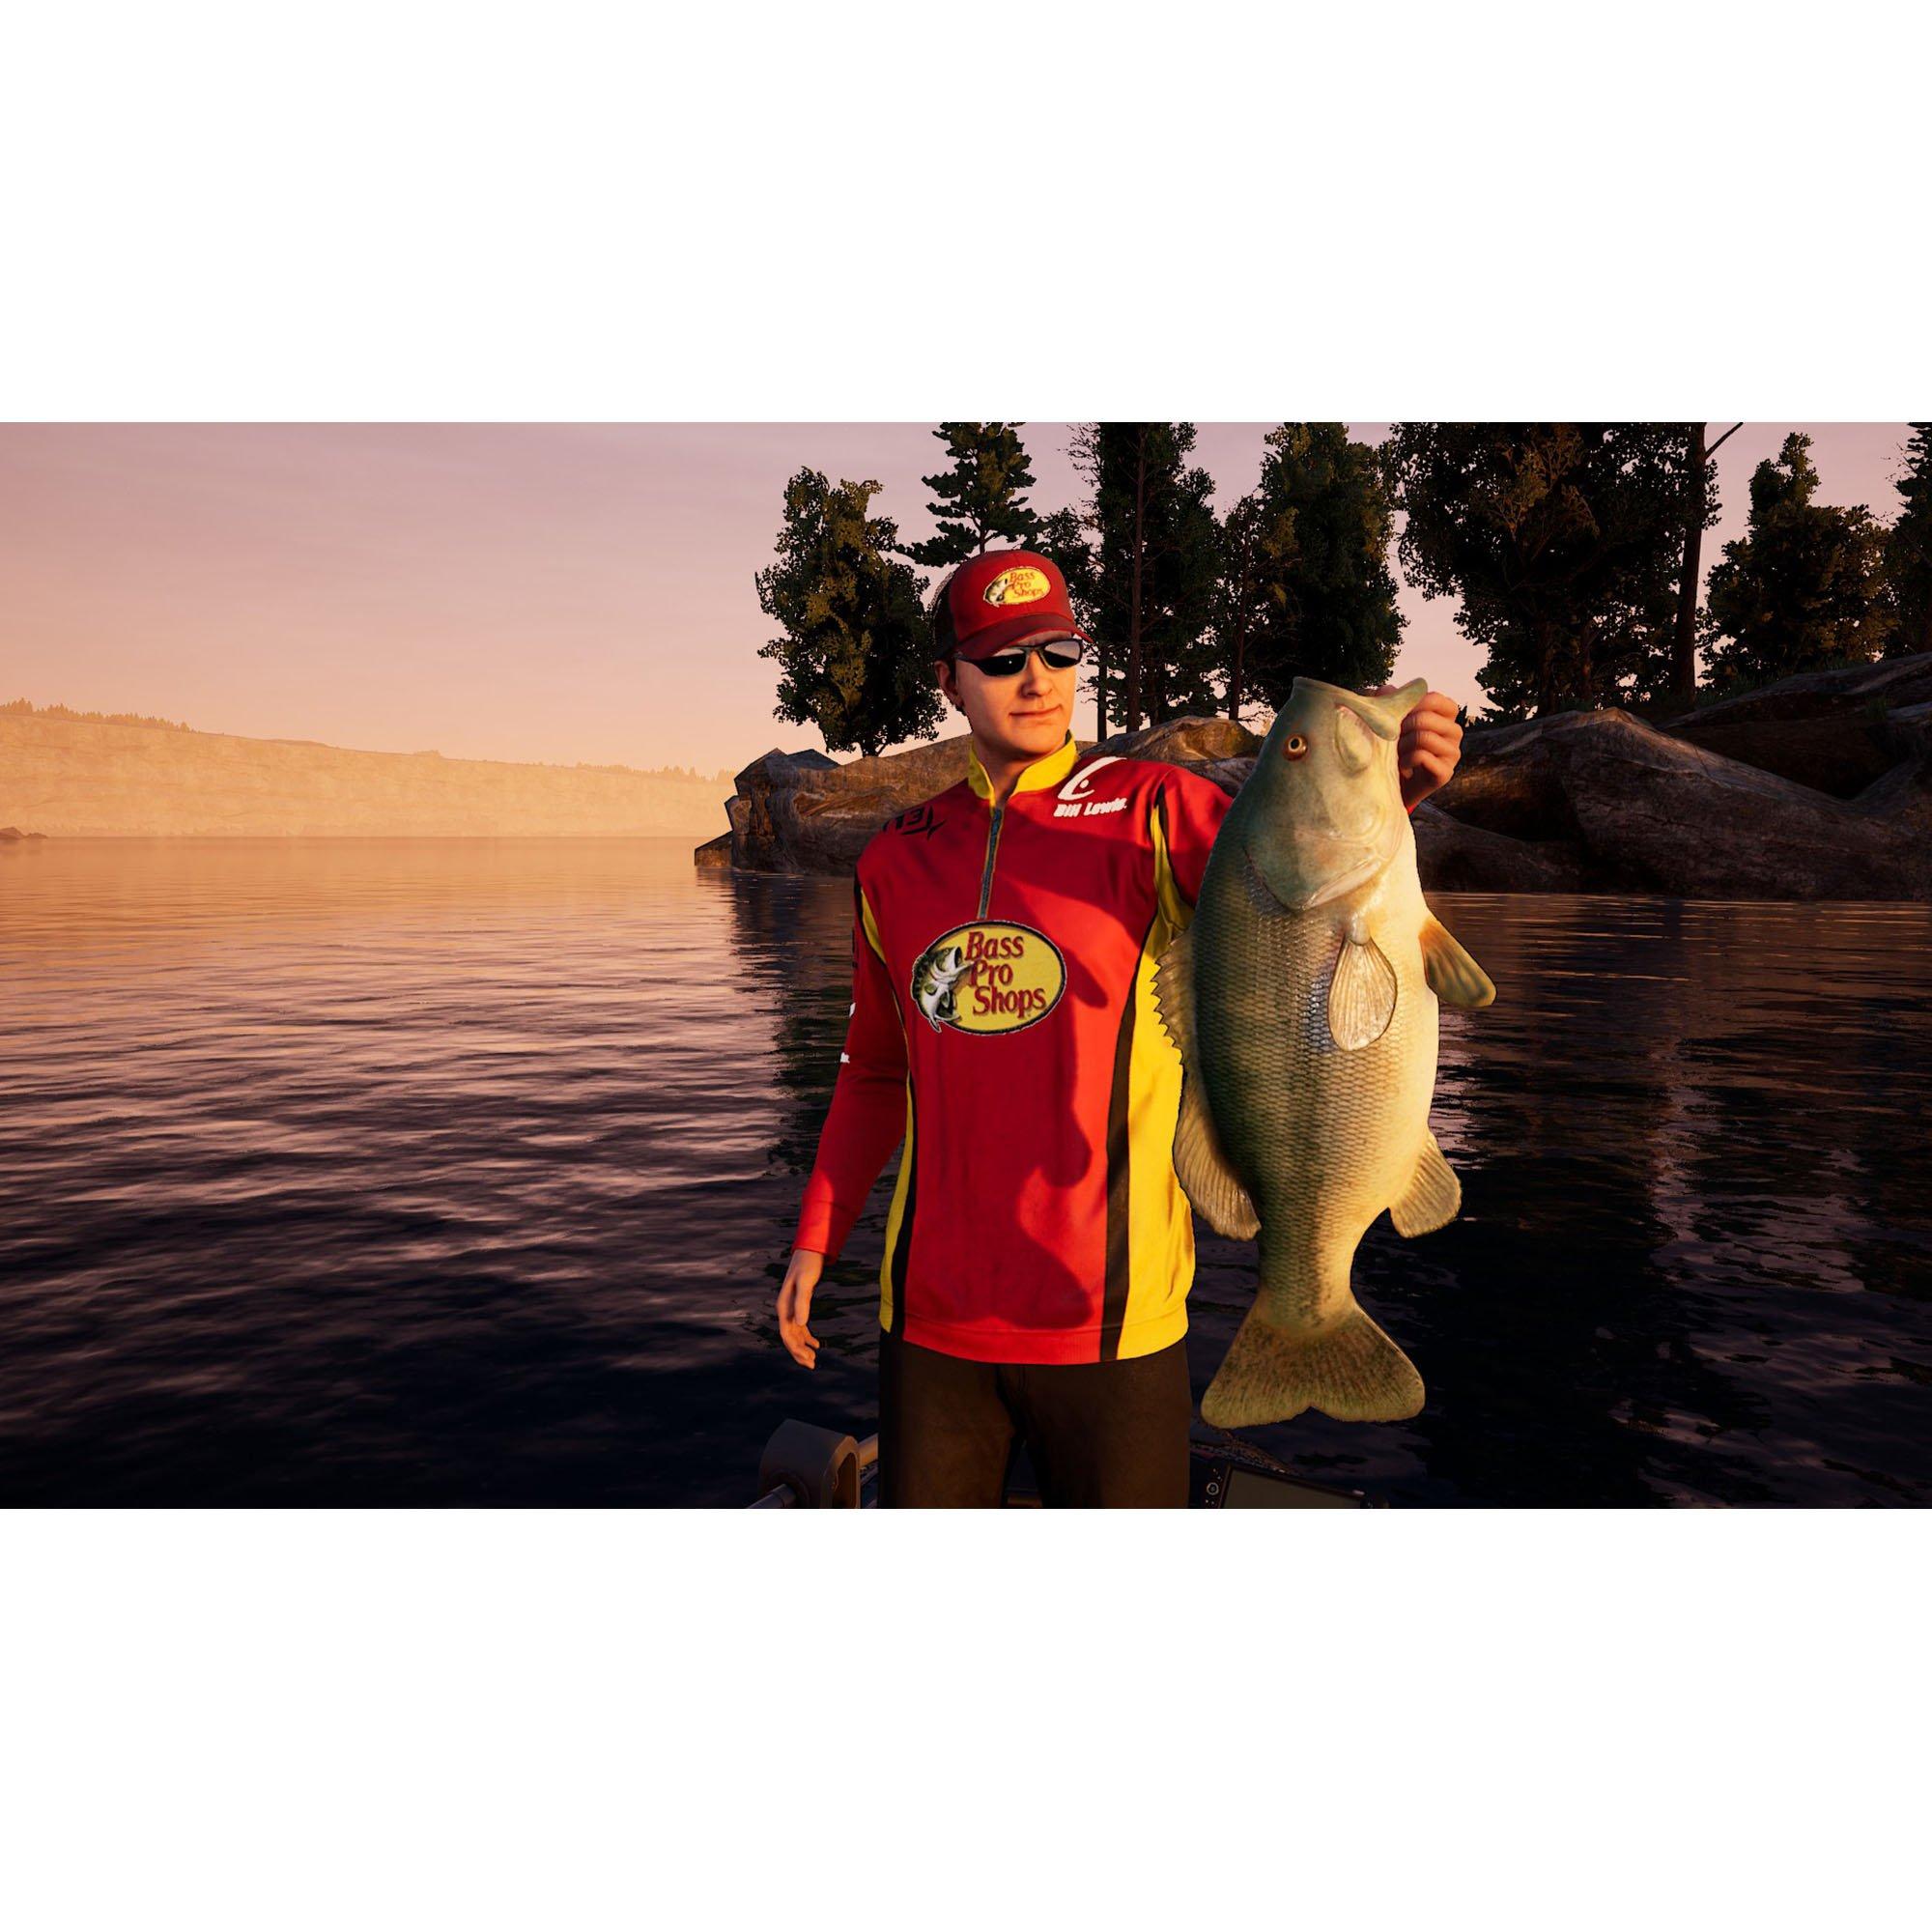 Fishing Sim World: Bass Pro Shops Edition - Xbox One